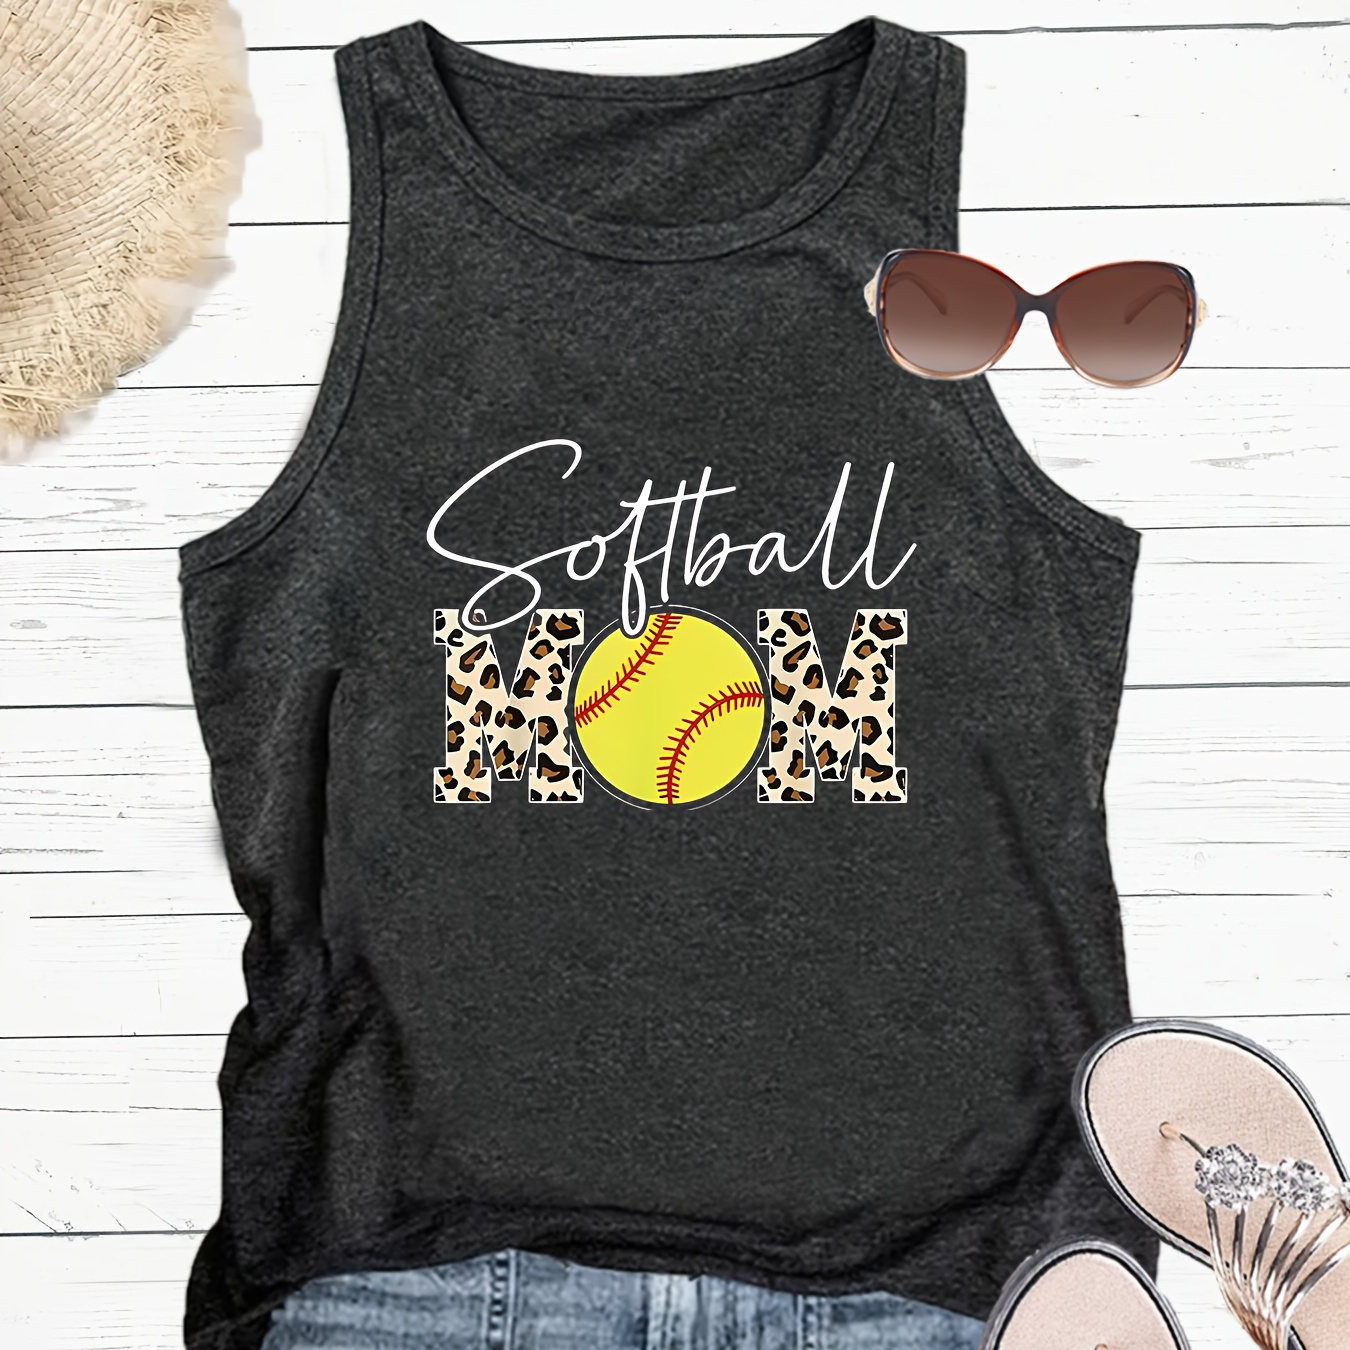 

Softball Print Crew Neck Tank Top, Casual Sleeveless Tank Top For Summer, Women's Clothing